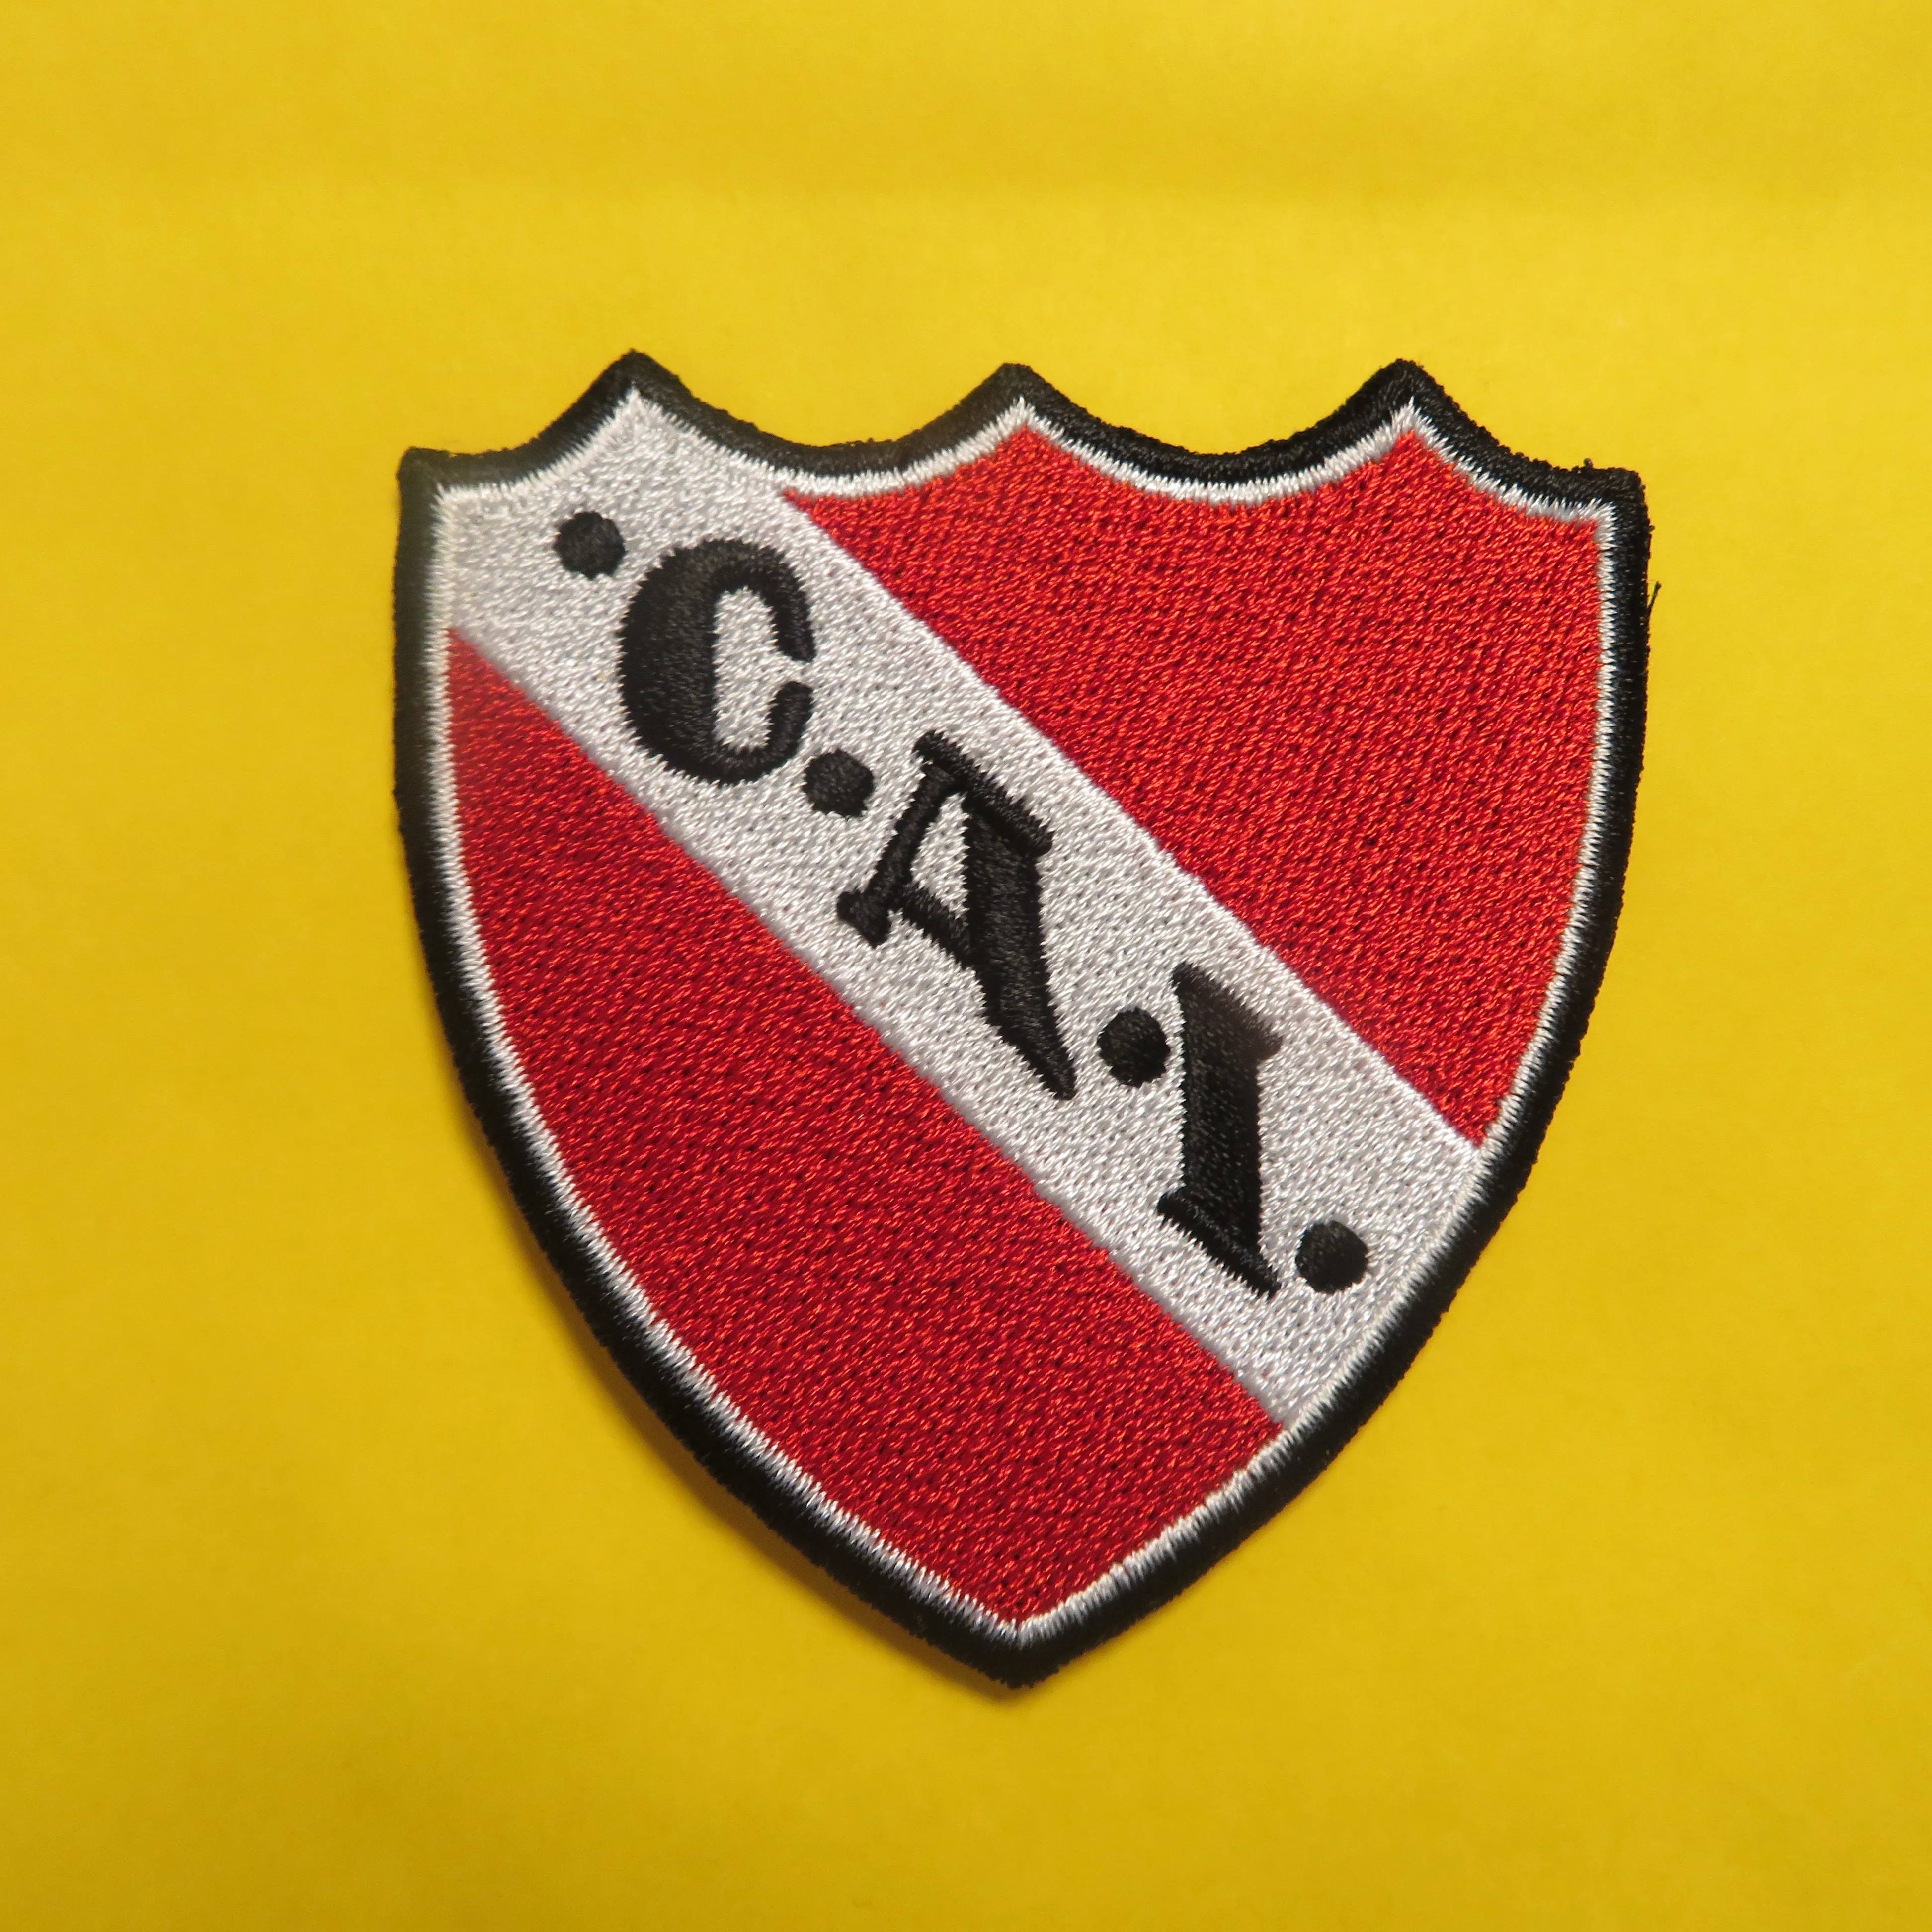 Aufnäher Patch Fußball Football club Santos soccer Iron on badge bügelbild 